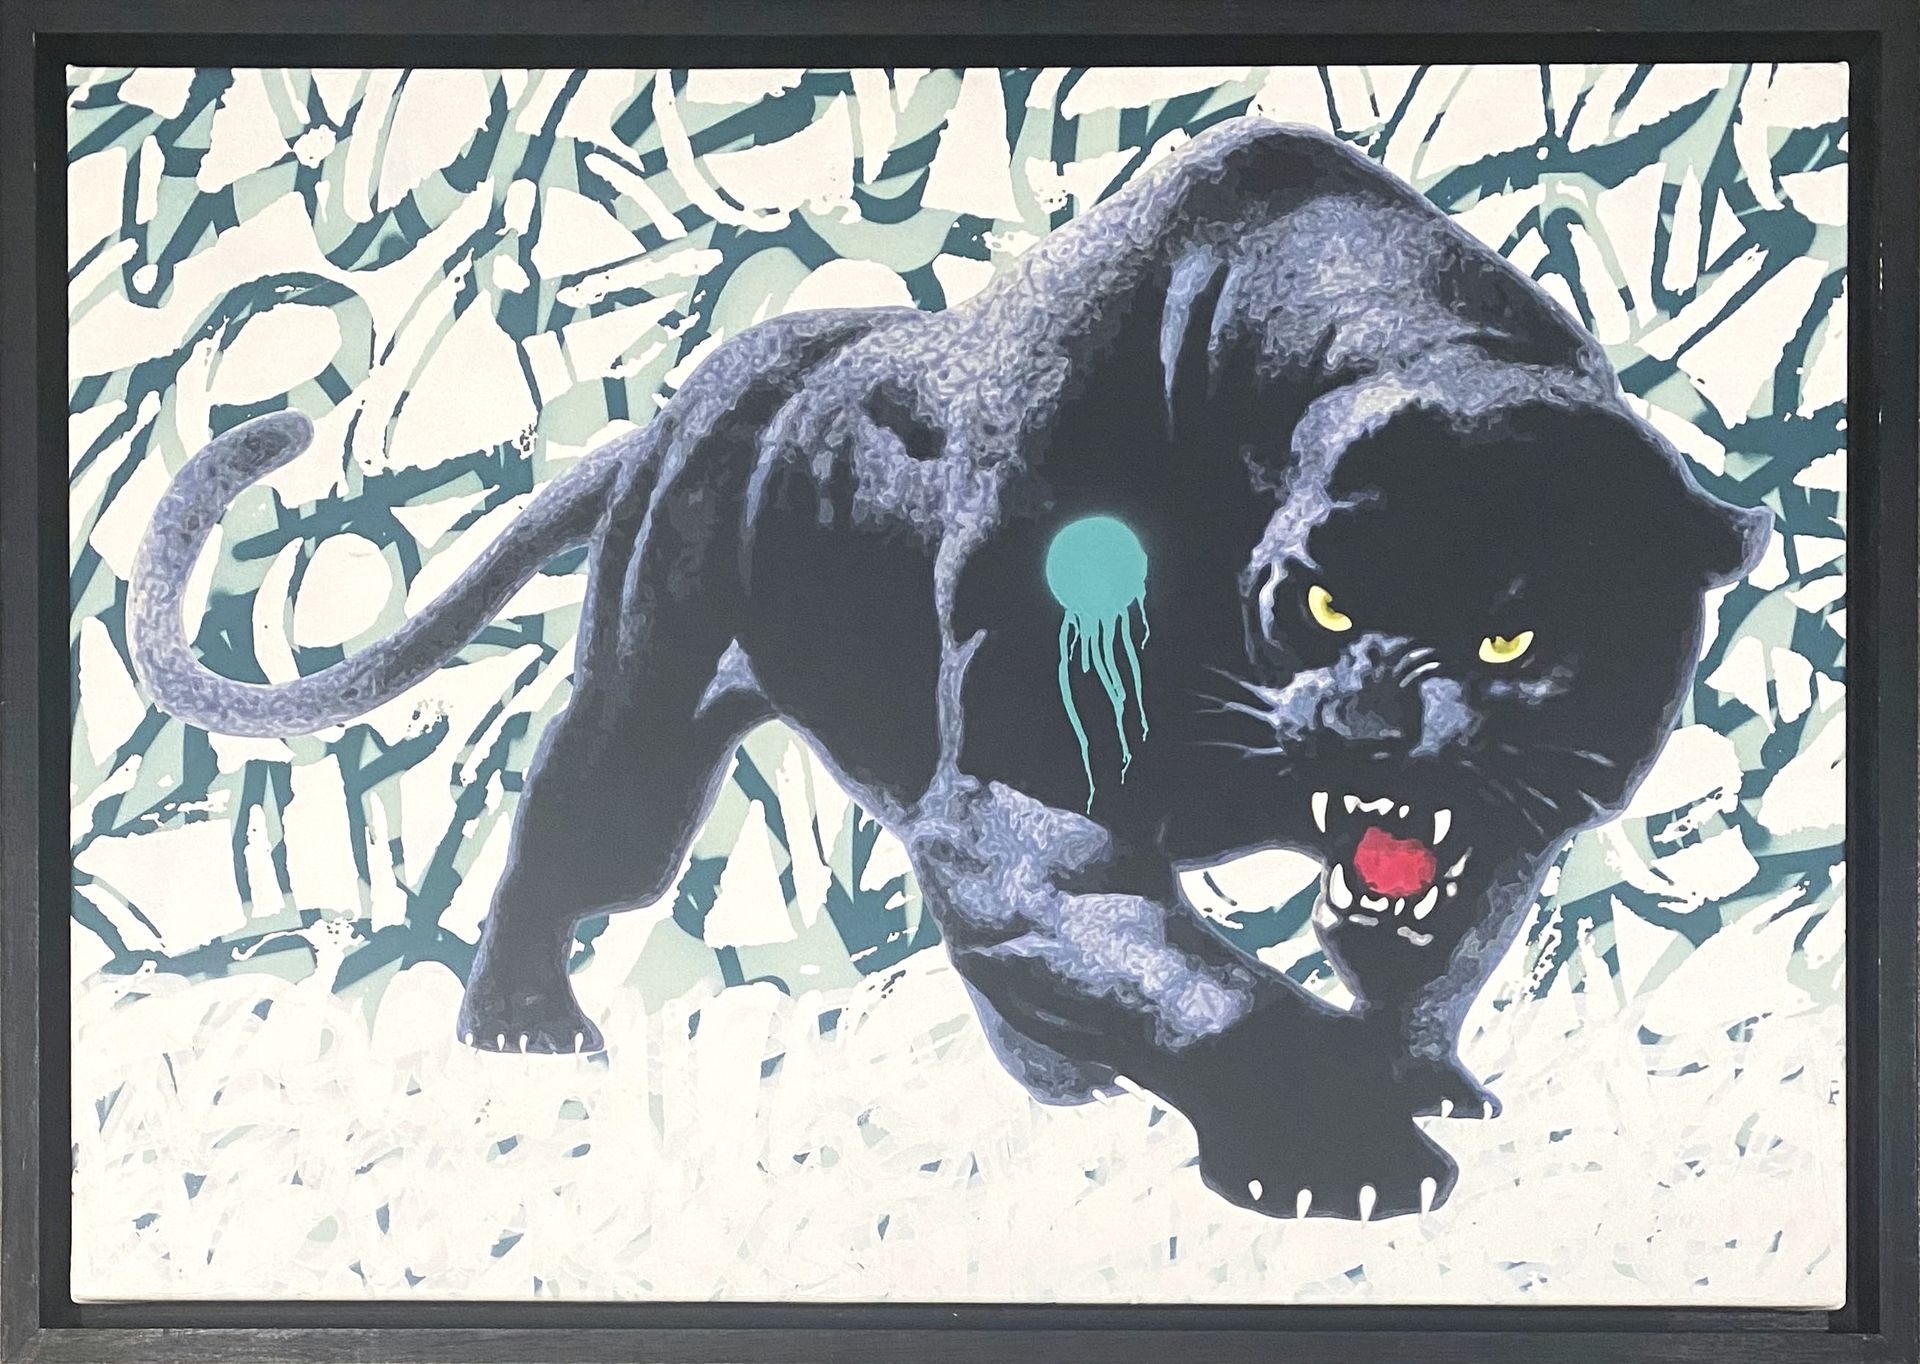 Null 安托万-加玛德 (1977)
黑豹, 2015
丙烯酸和气雾剂在画布上
65 x 92 cm